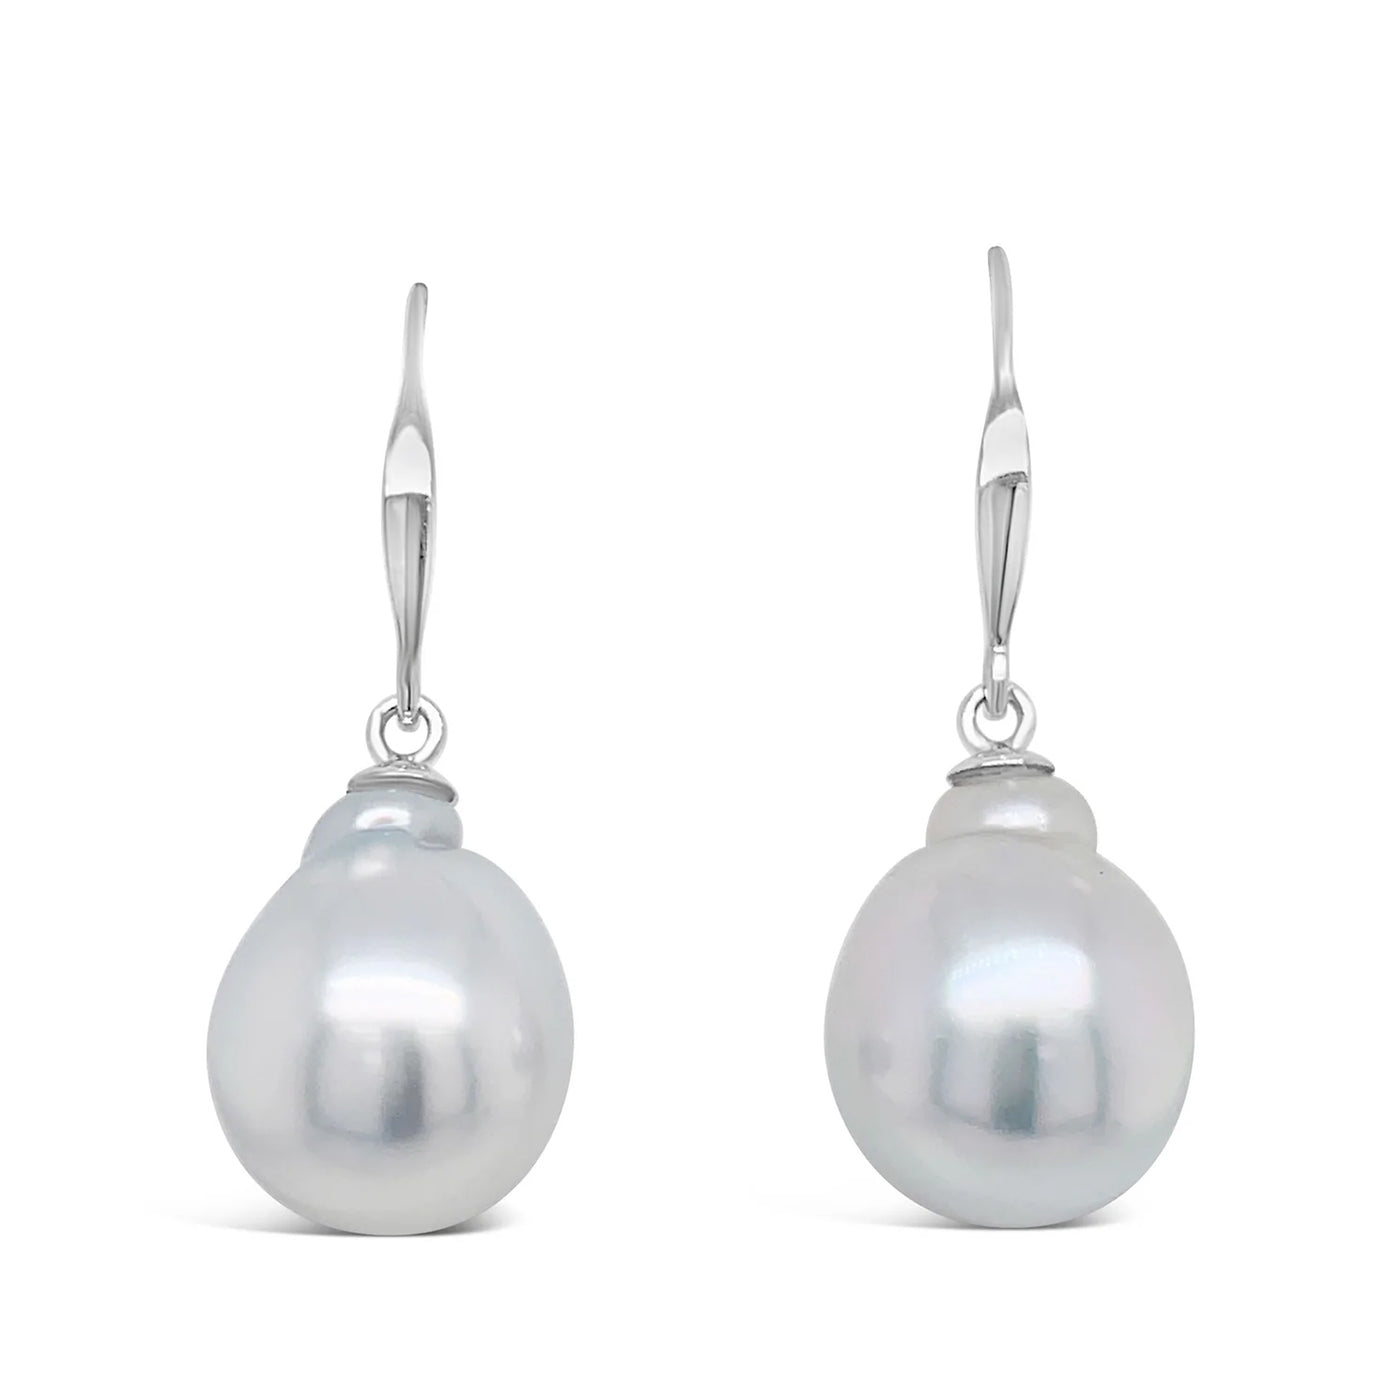 Matching South Sea White Pearl Dangle Earrings